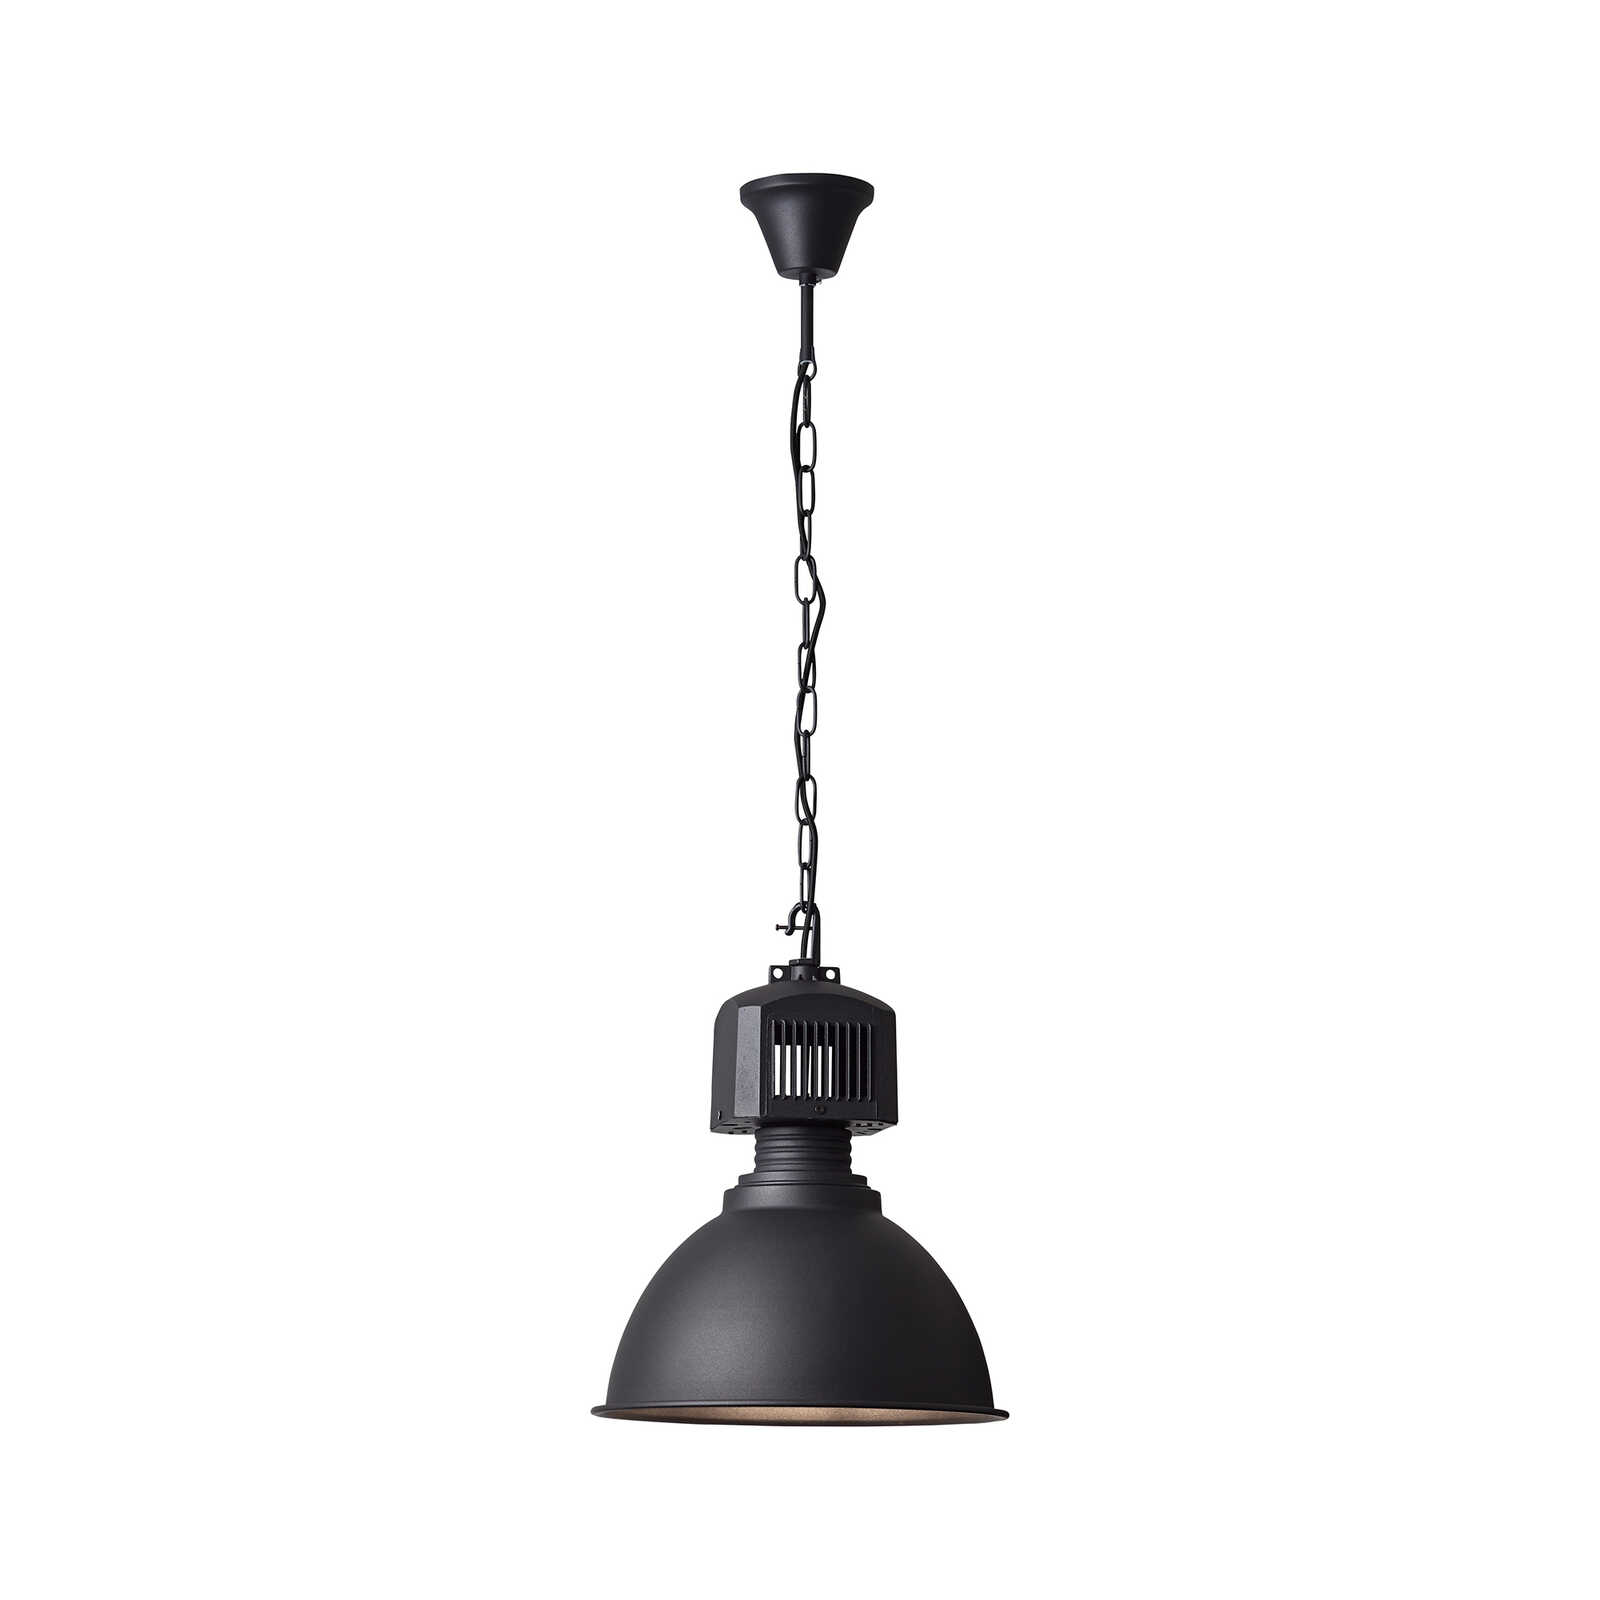 Metalen hanglamp - Cara - Zwart
